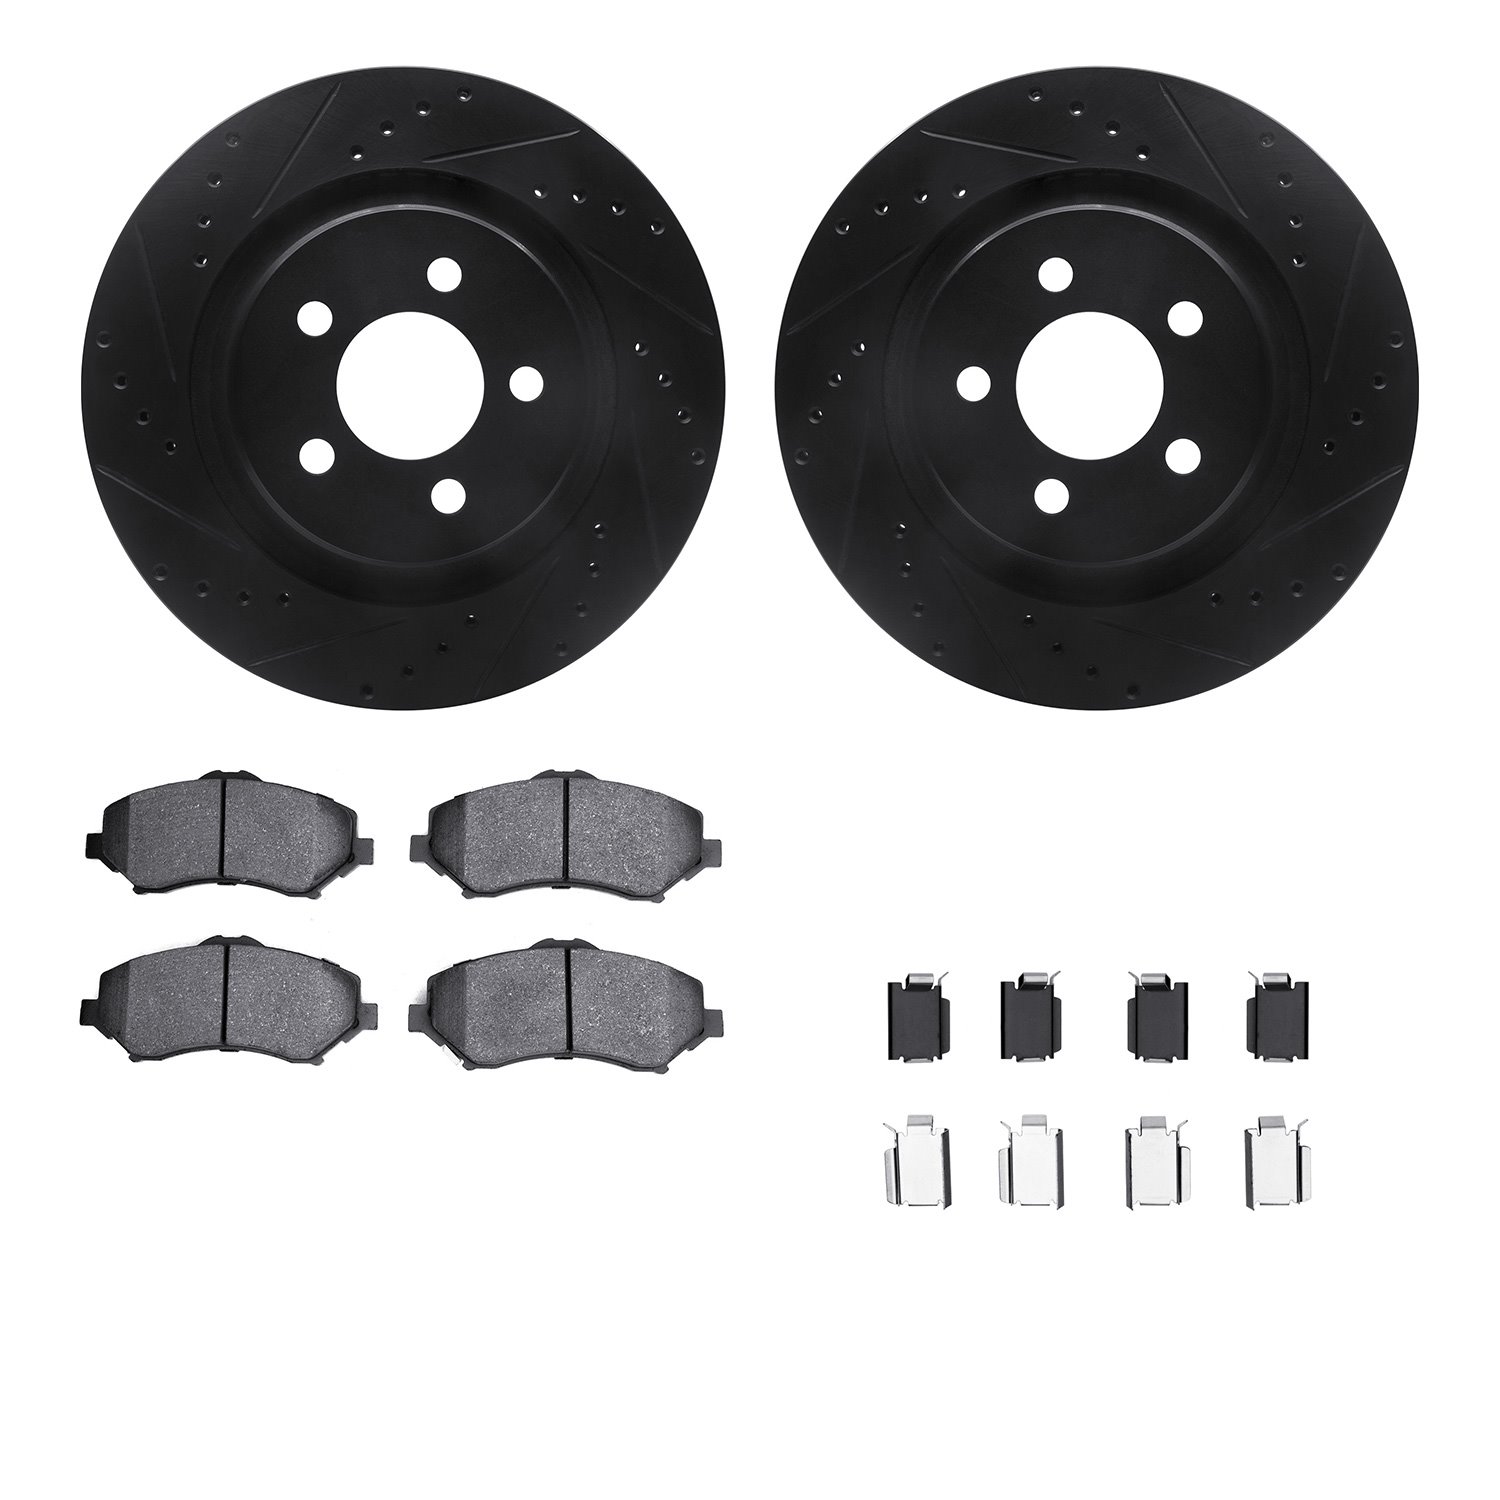 8412-42028 Drilled/Slotted Brake Rotors with Ultimate-Duty Brake Pads Kit & Hardware [Black], 2011-2012 Mopar, Position: Front